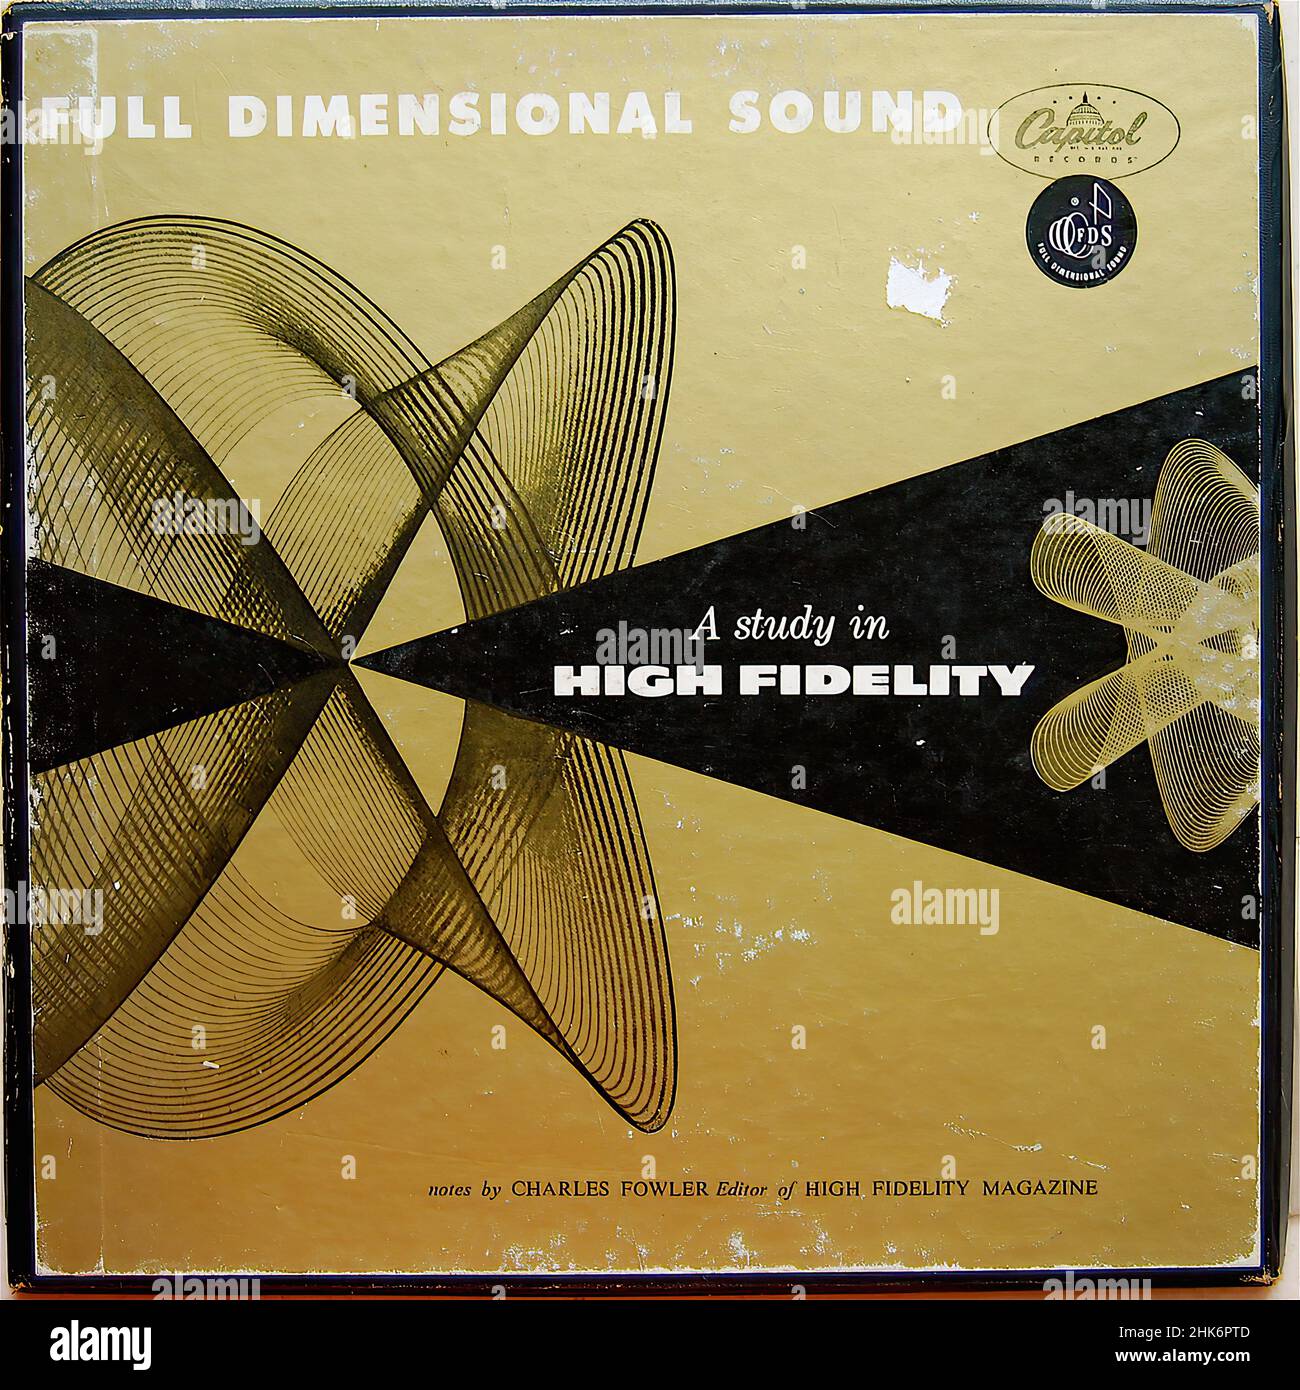 Vinylcover - Hi Fidelity Stereo Test Record - Full Dimensional Sound - A  Study in High Fidelity Stockfotografie - Alamy